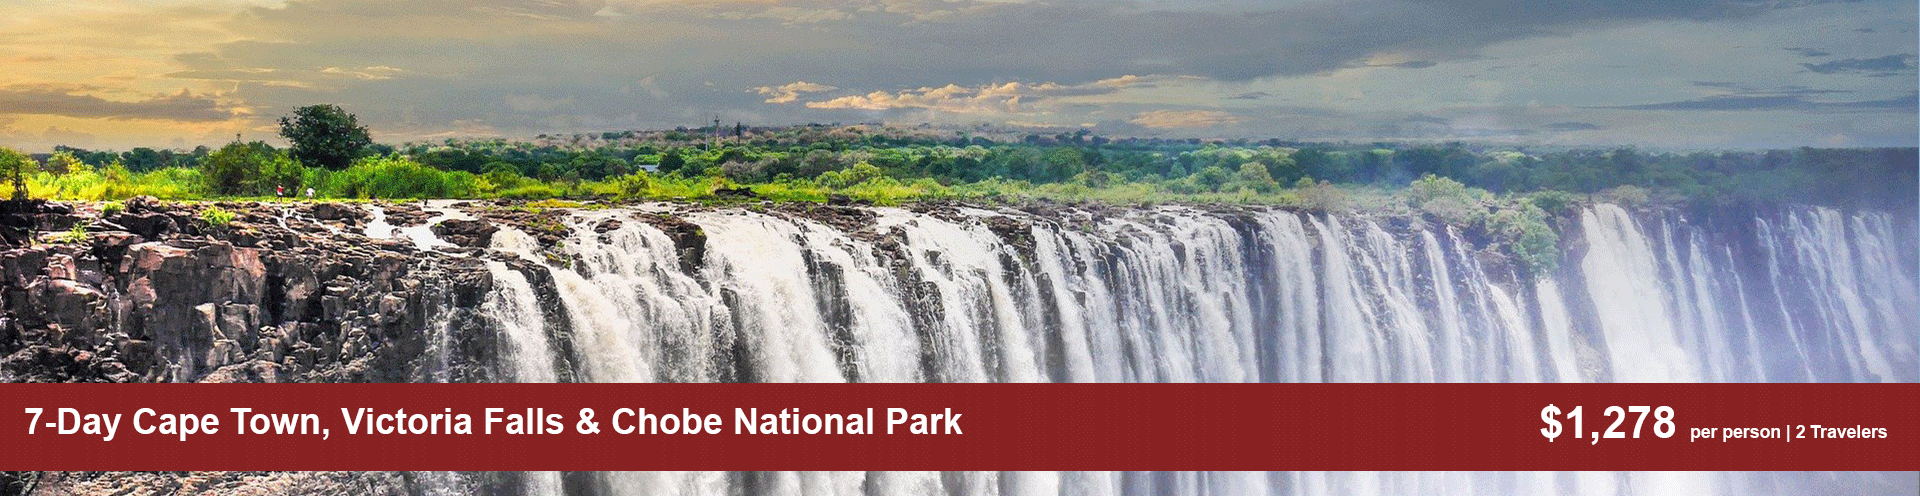 7-Day-Cape-Town,-Victoria-Falls-&-Chobe-National-Park